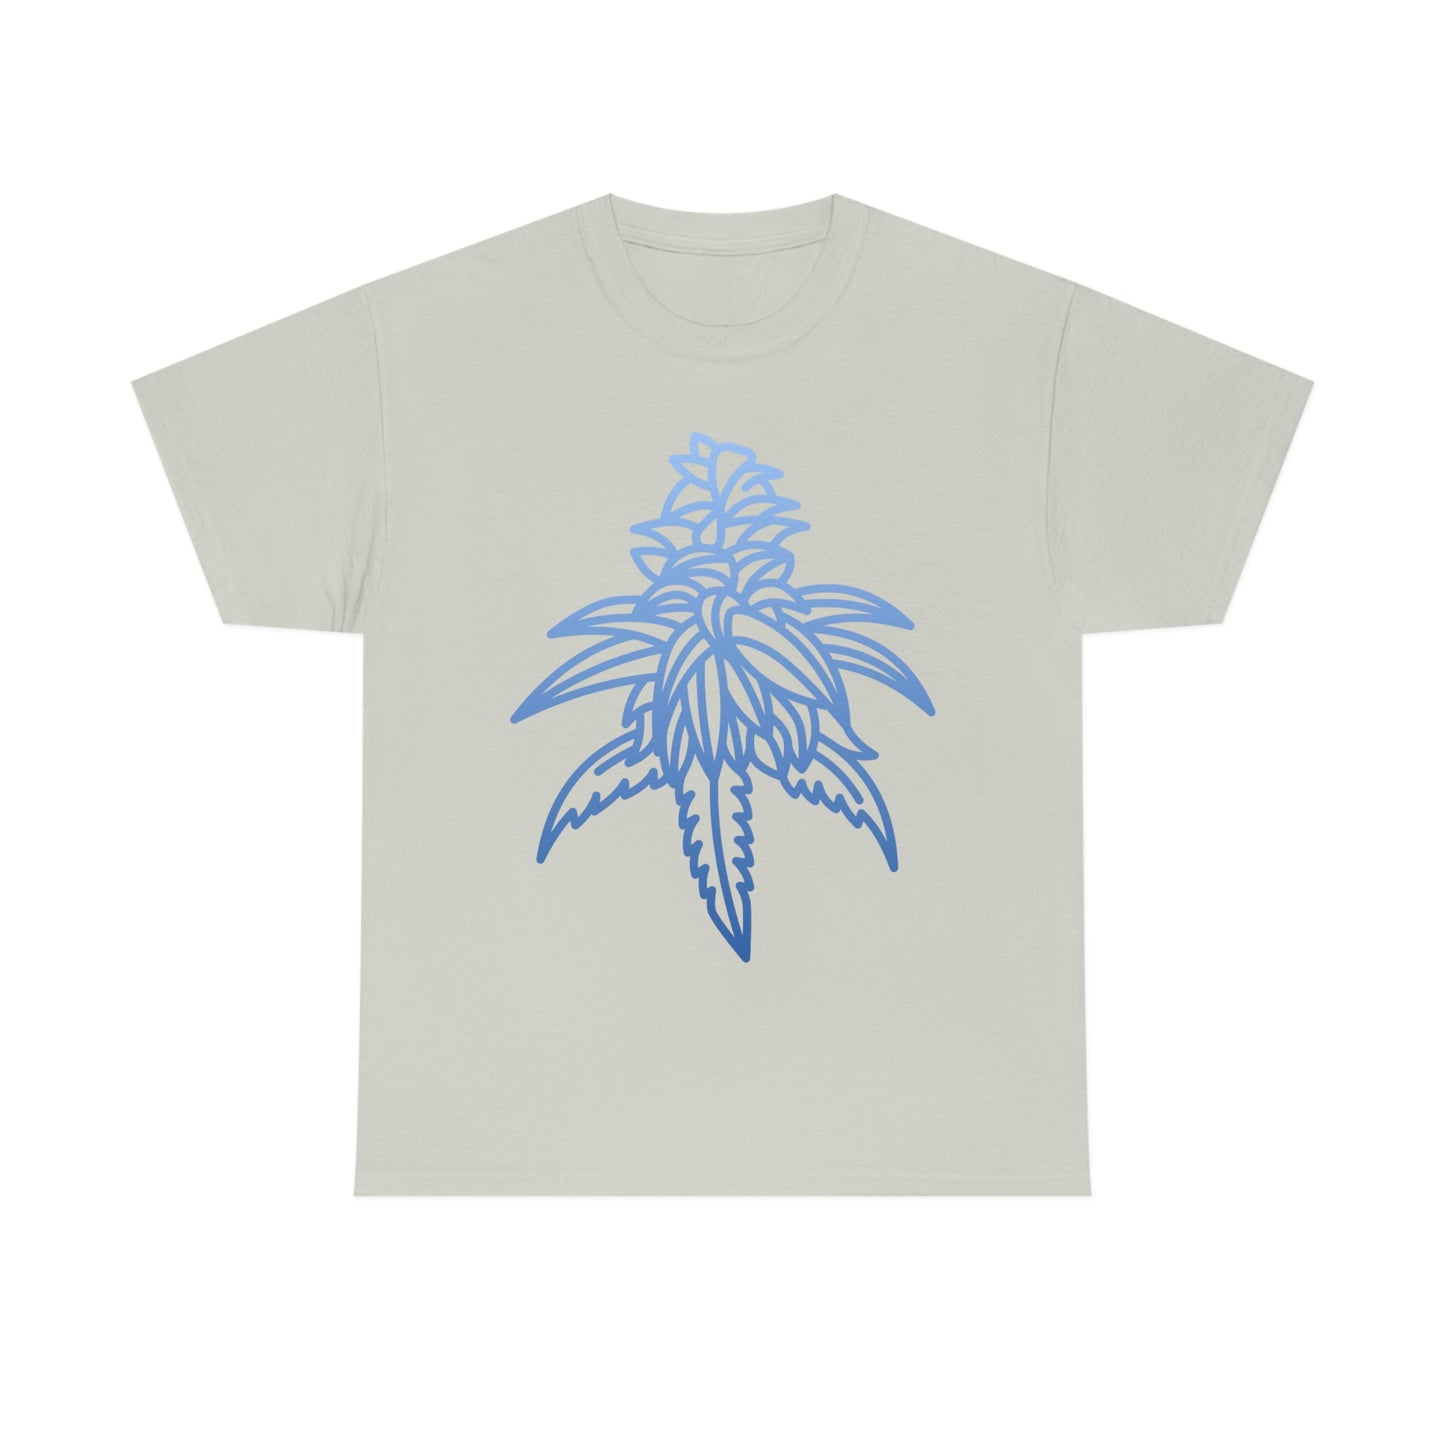 a Blue Dream Cannabis Tee with a blue leaf on it.